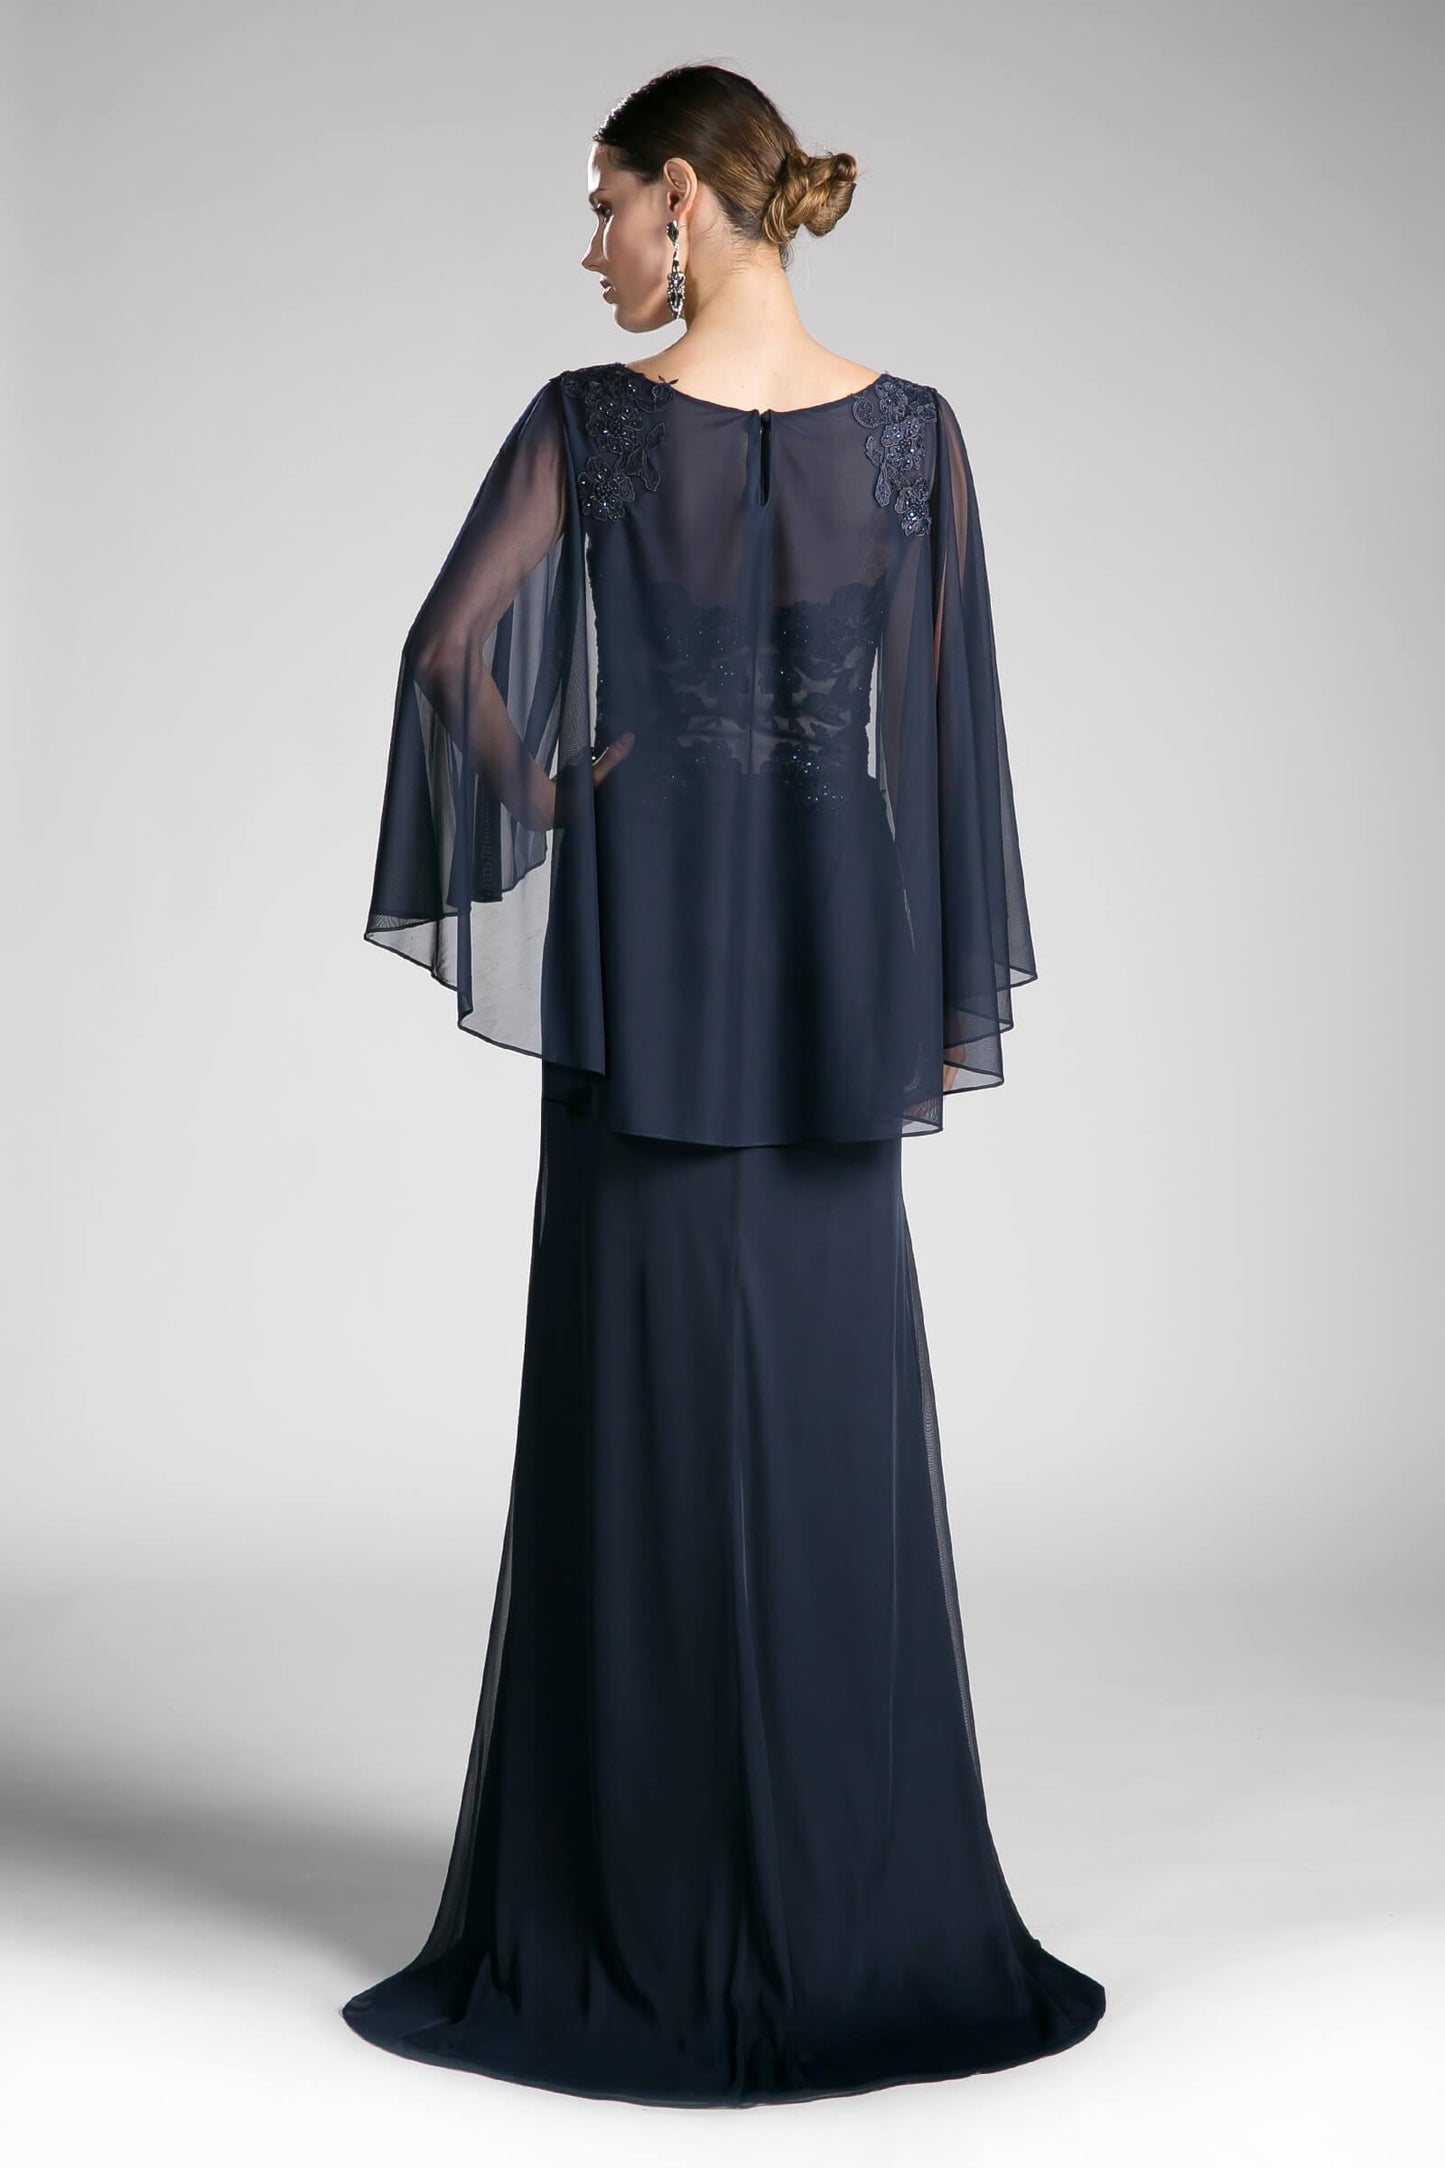 Formal Long Dress Mother of the Bride Cape - The Dress Outlet Cinderella Divine